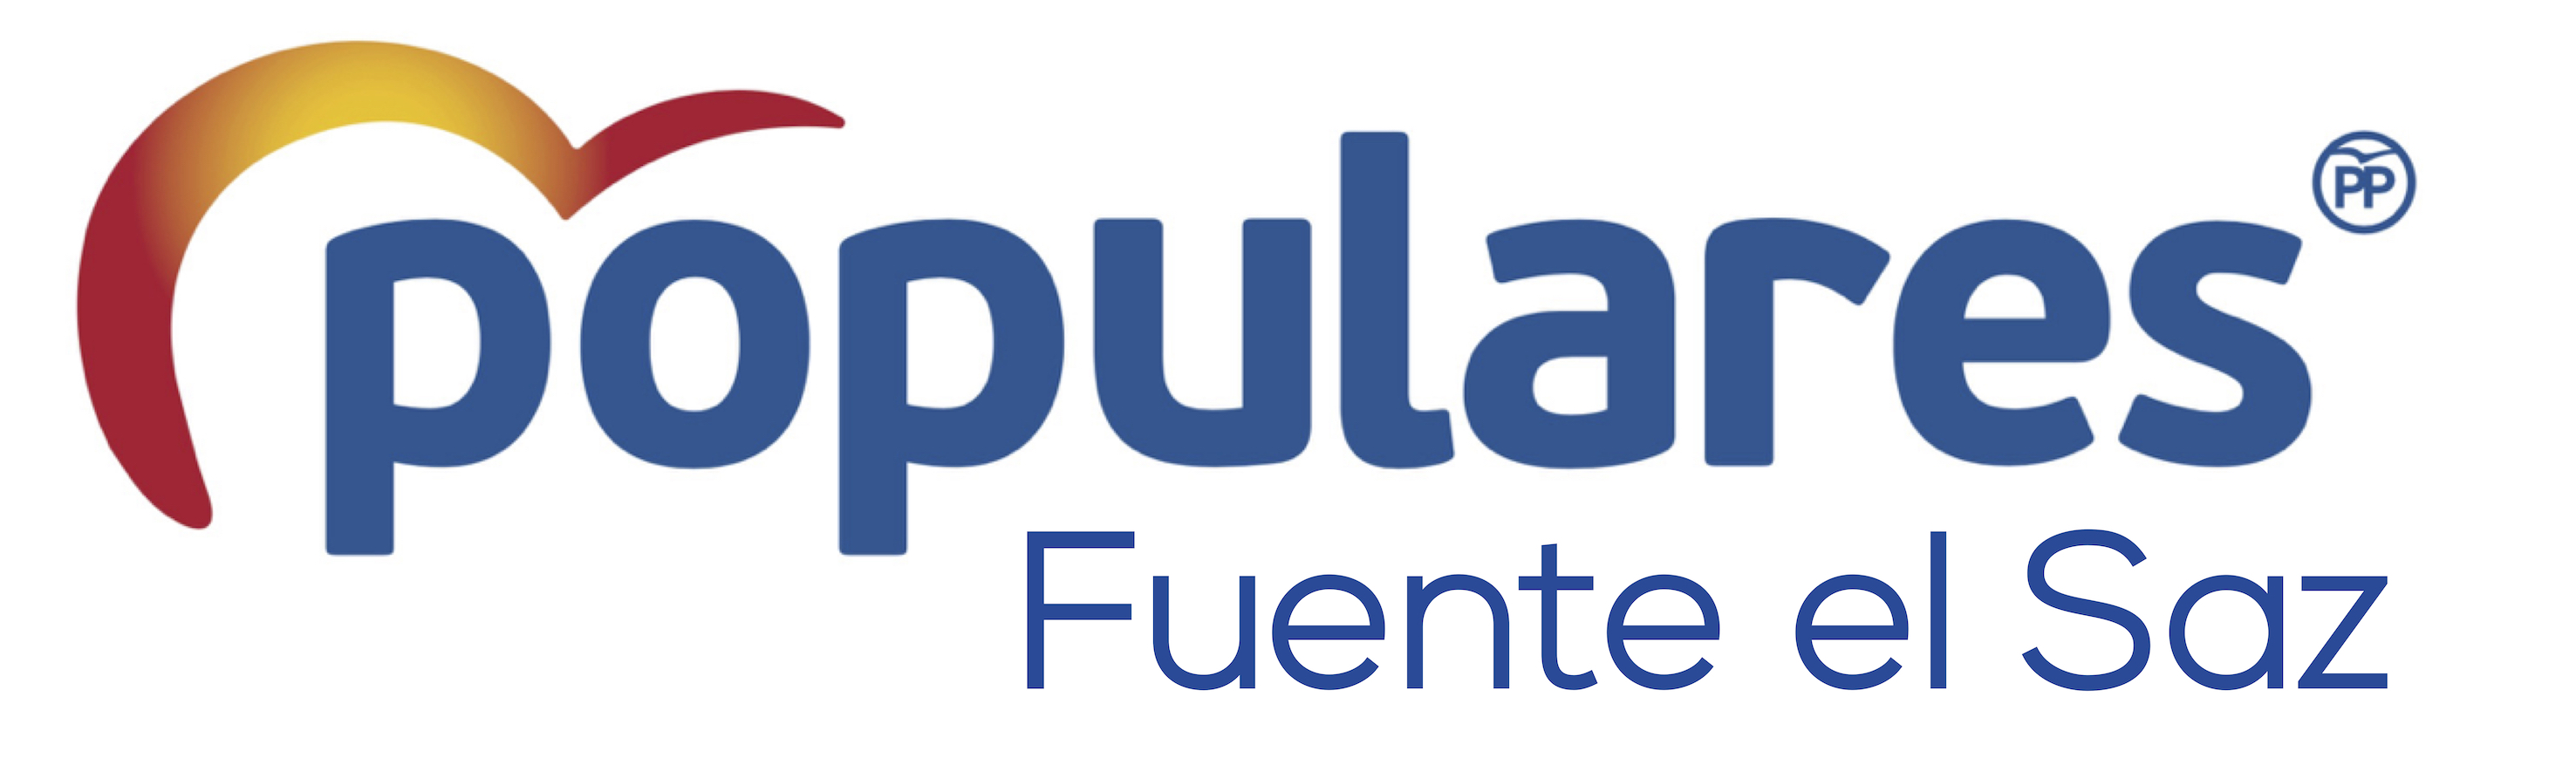 1 logo nuevo pp fsaz 2019 baja